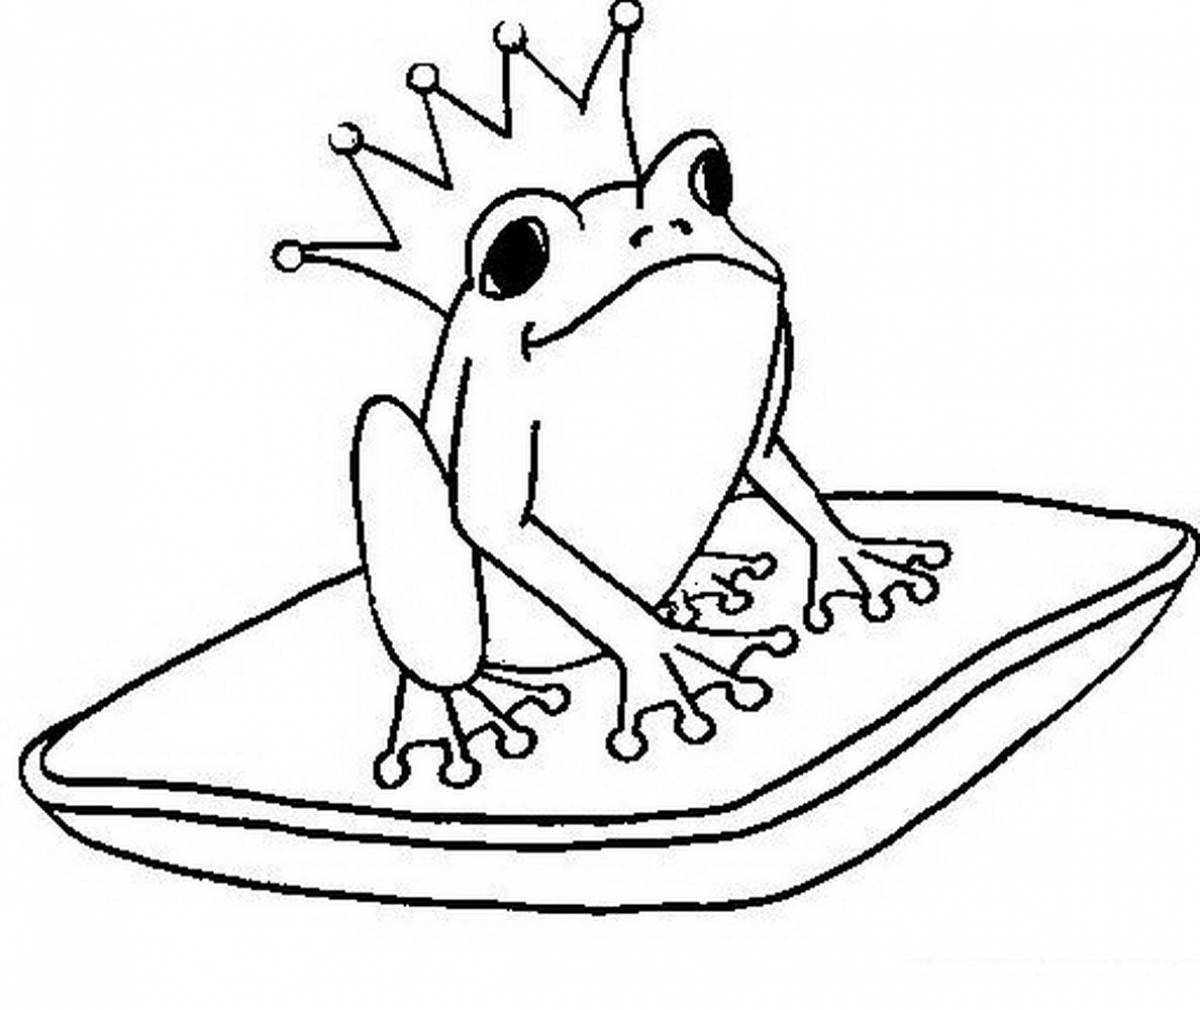 Princess frog on a pillow